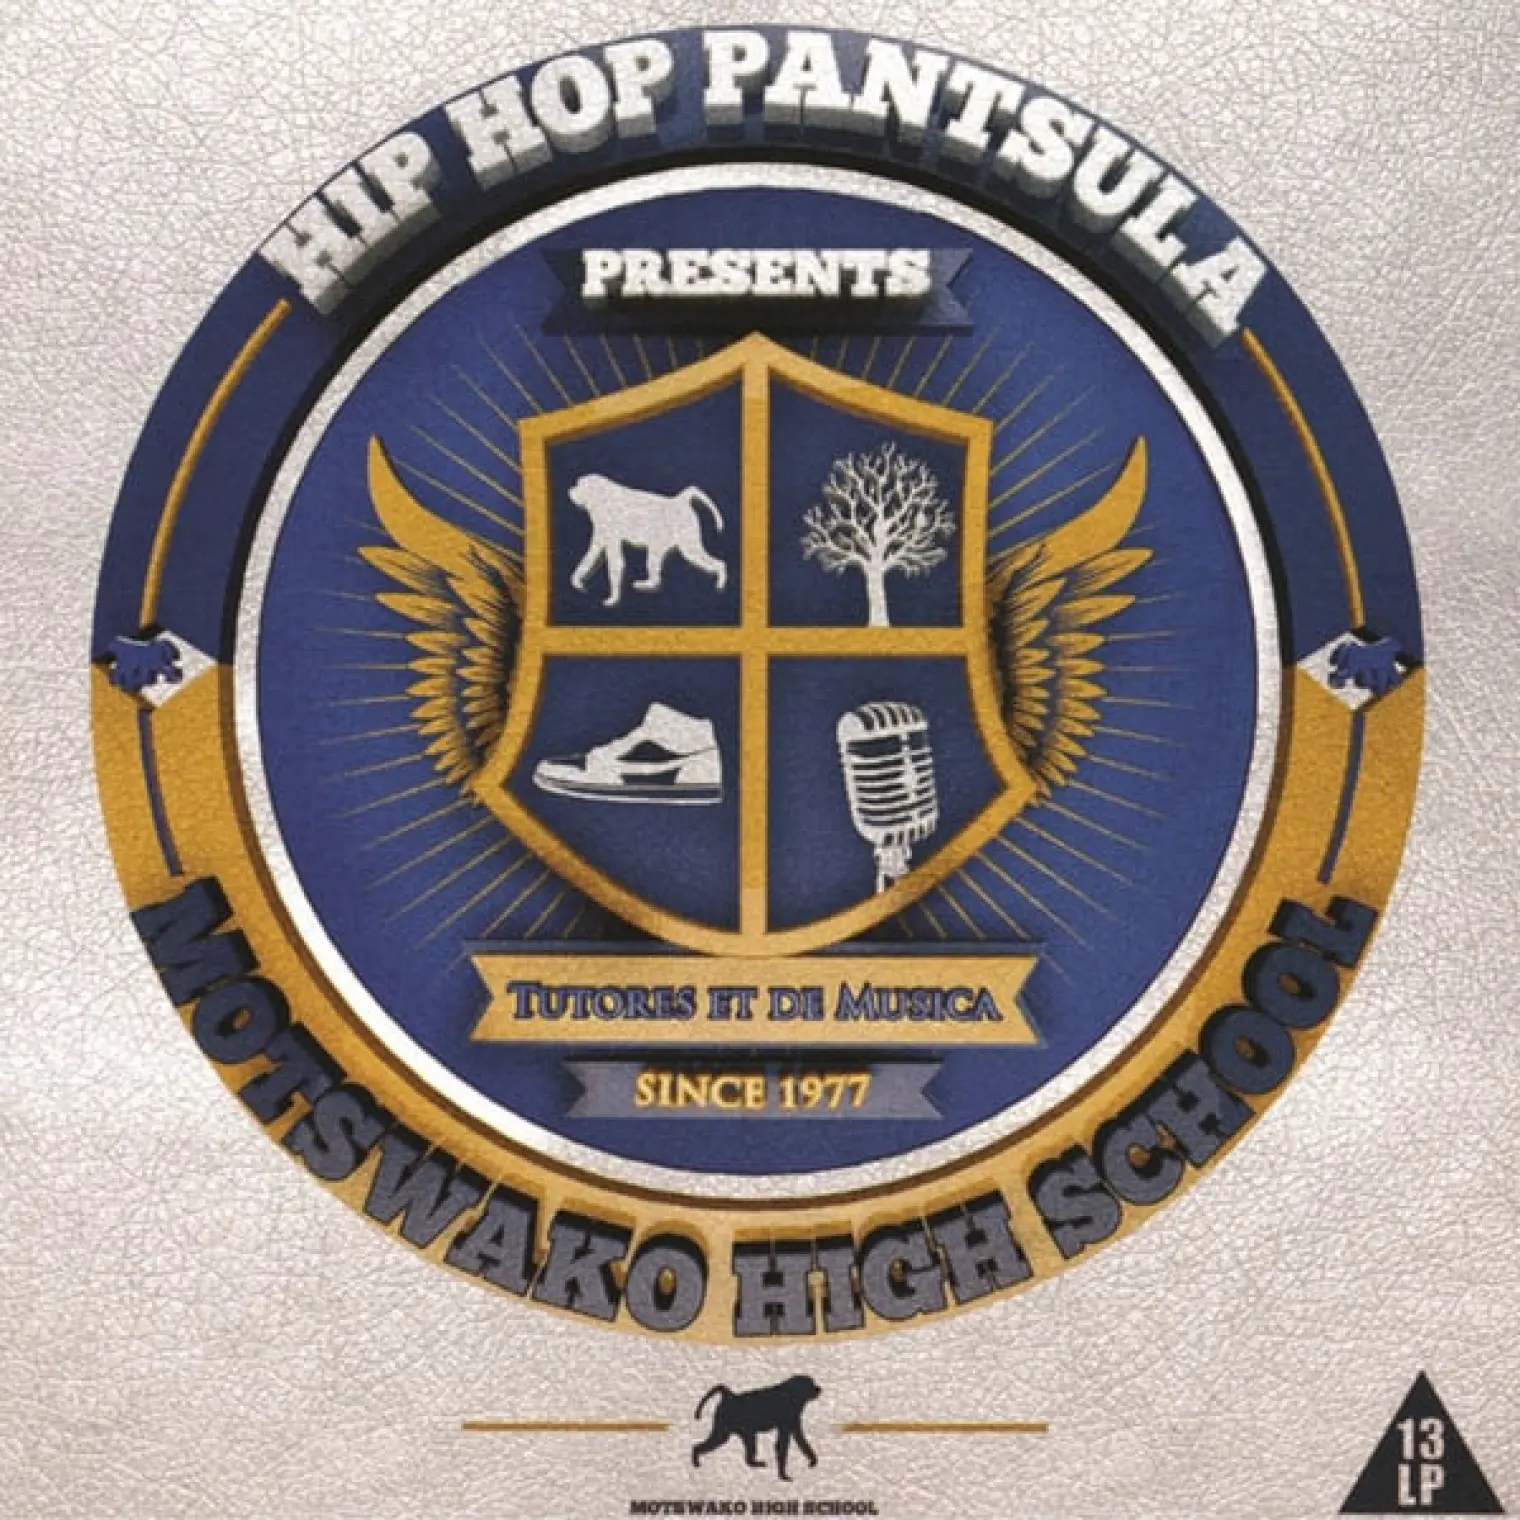 Motswako High School -  Hip Hop Pantsula 